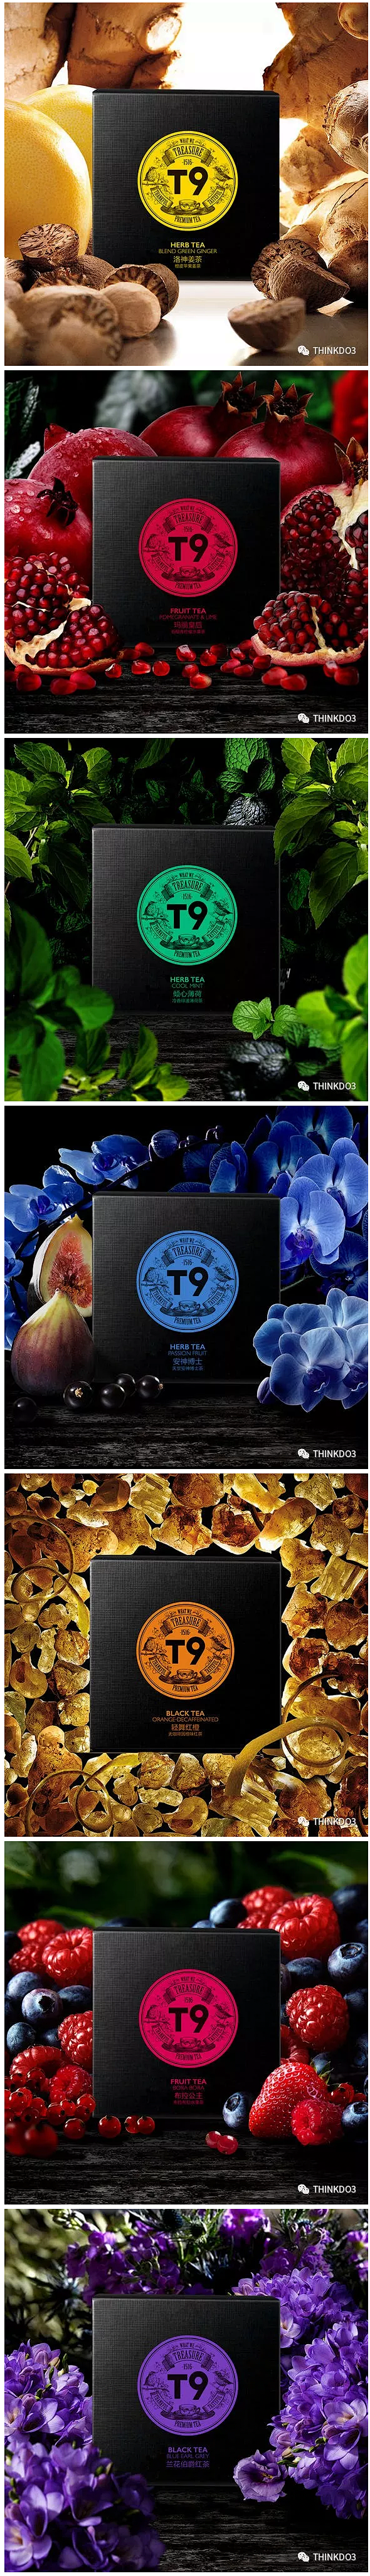 T9高端茗茶品牌出类拔萃的包装形象设计